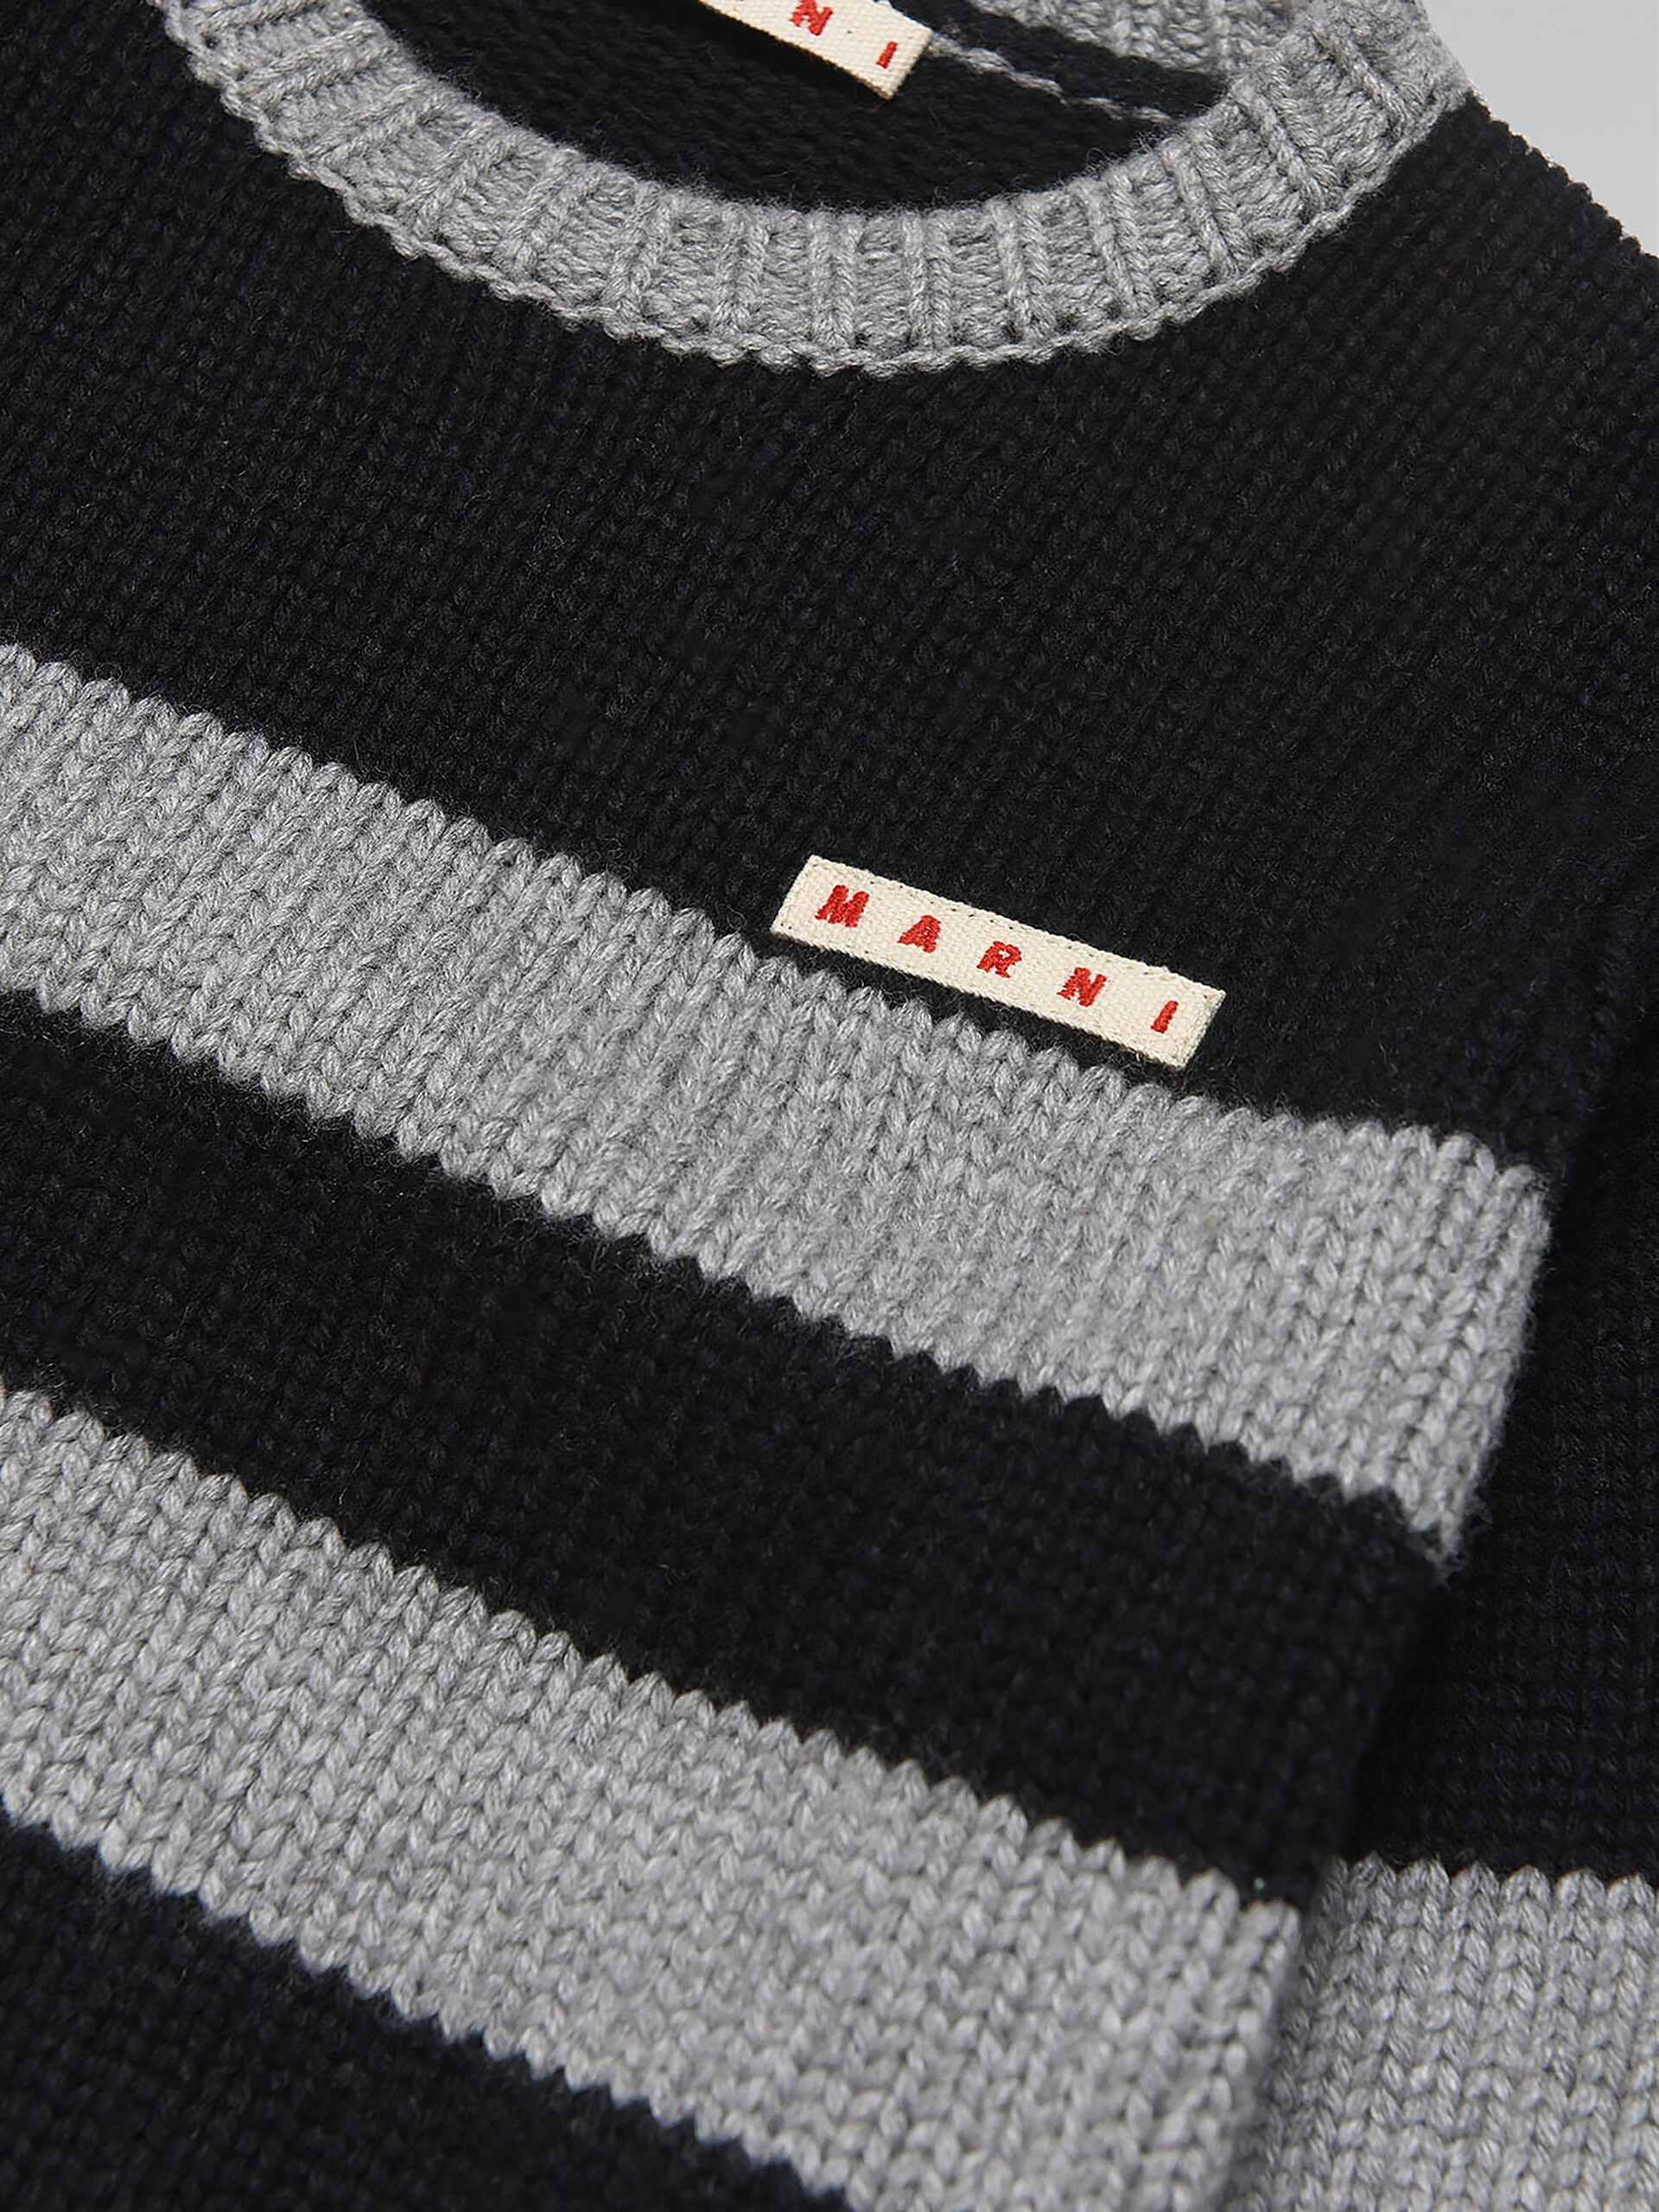 Striped crewneck jumper - Knitwear - Image 3